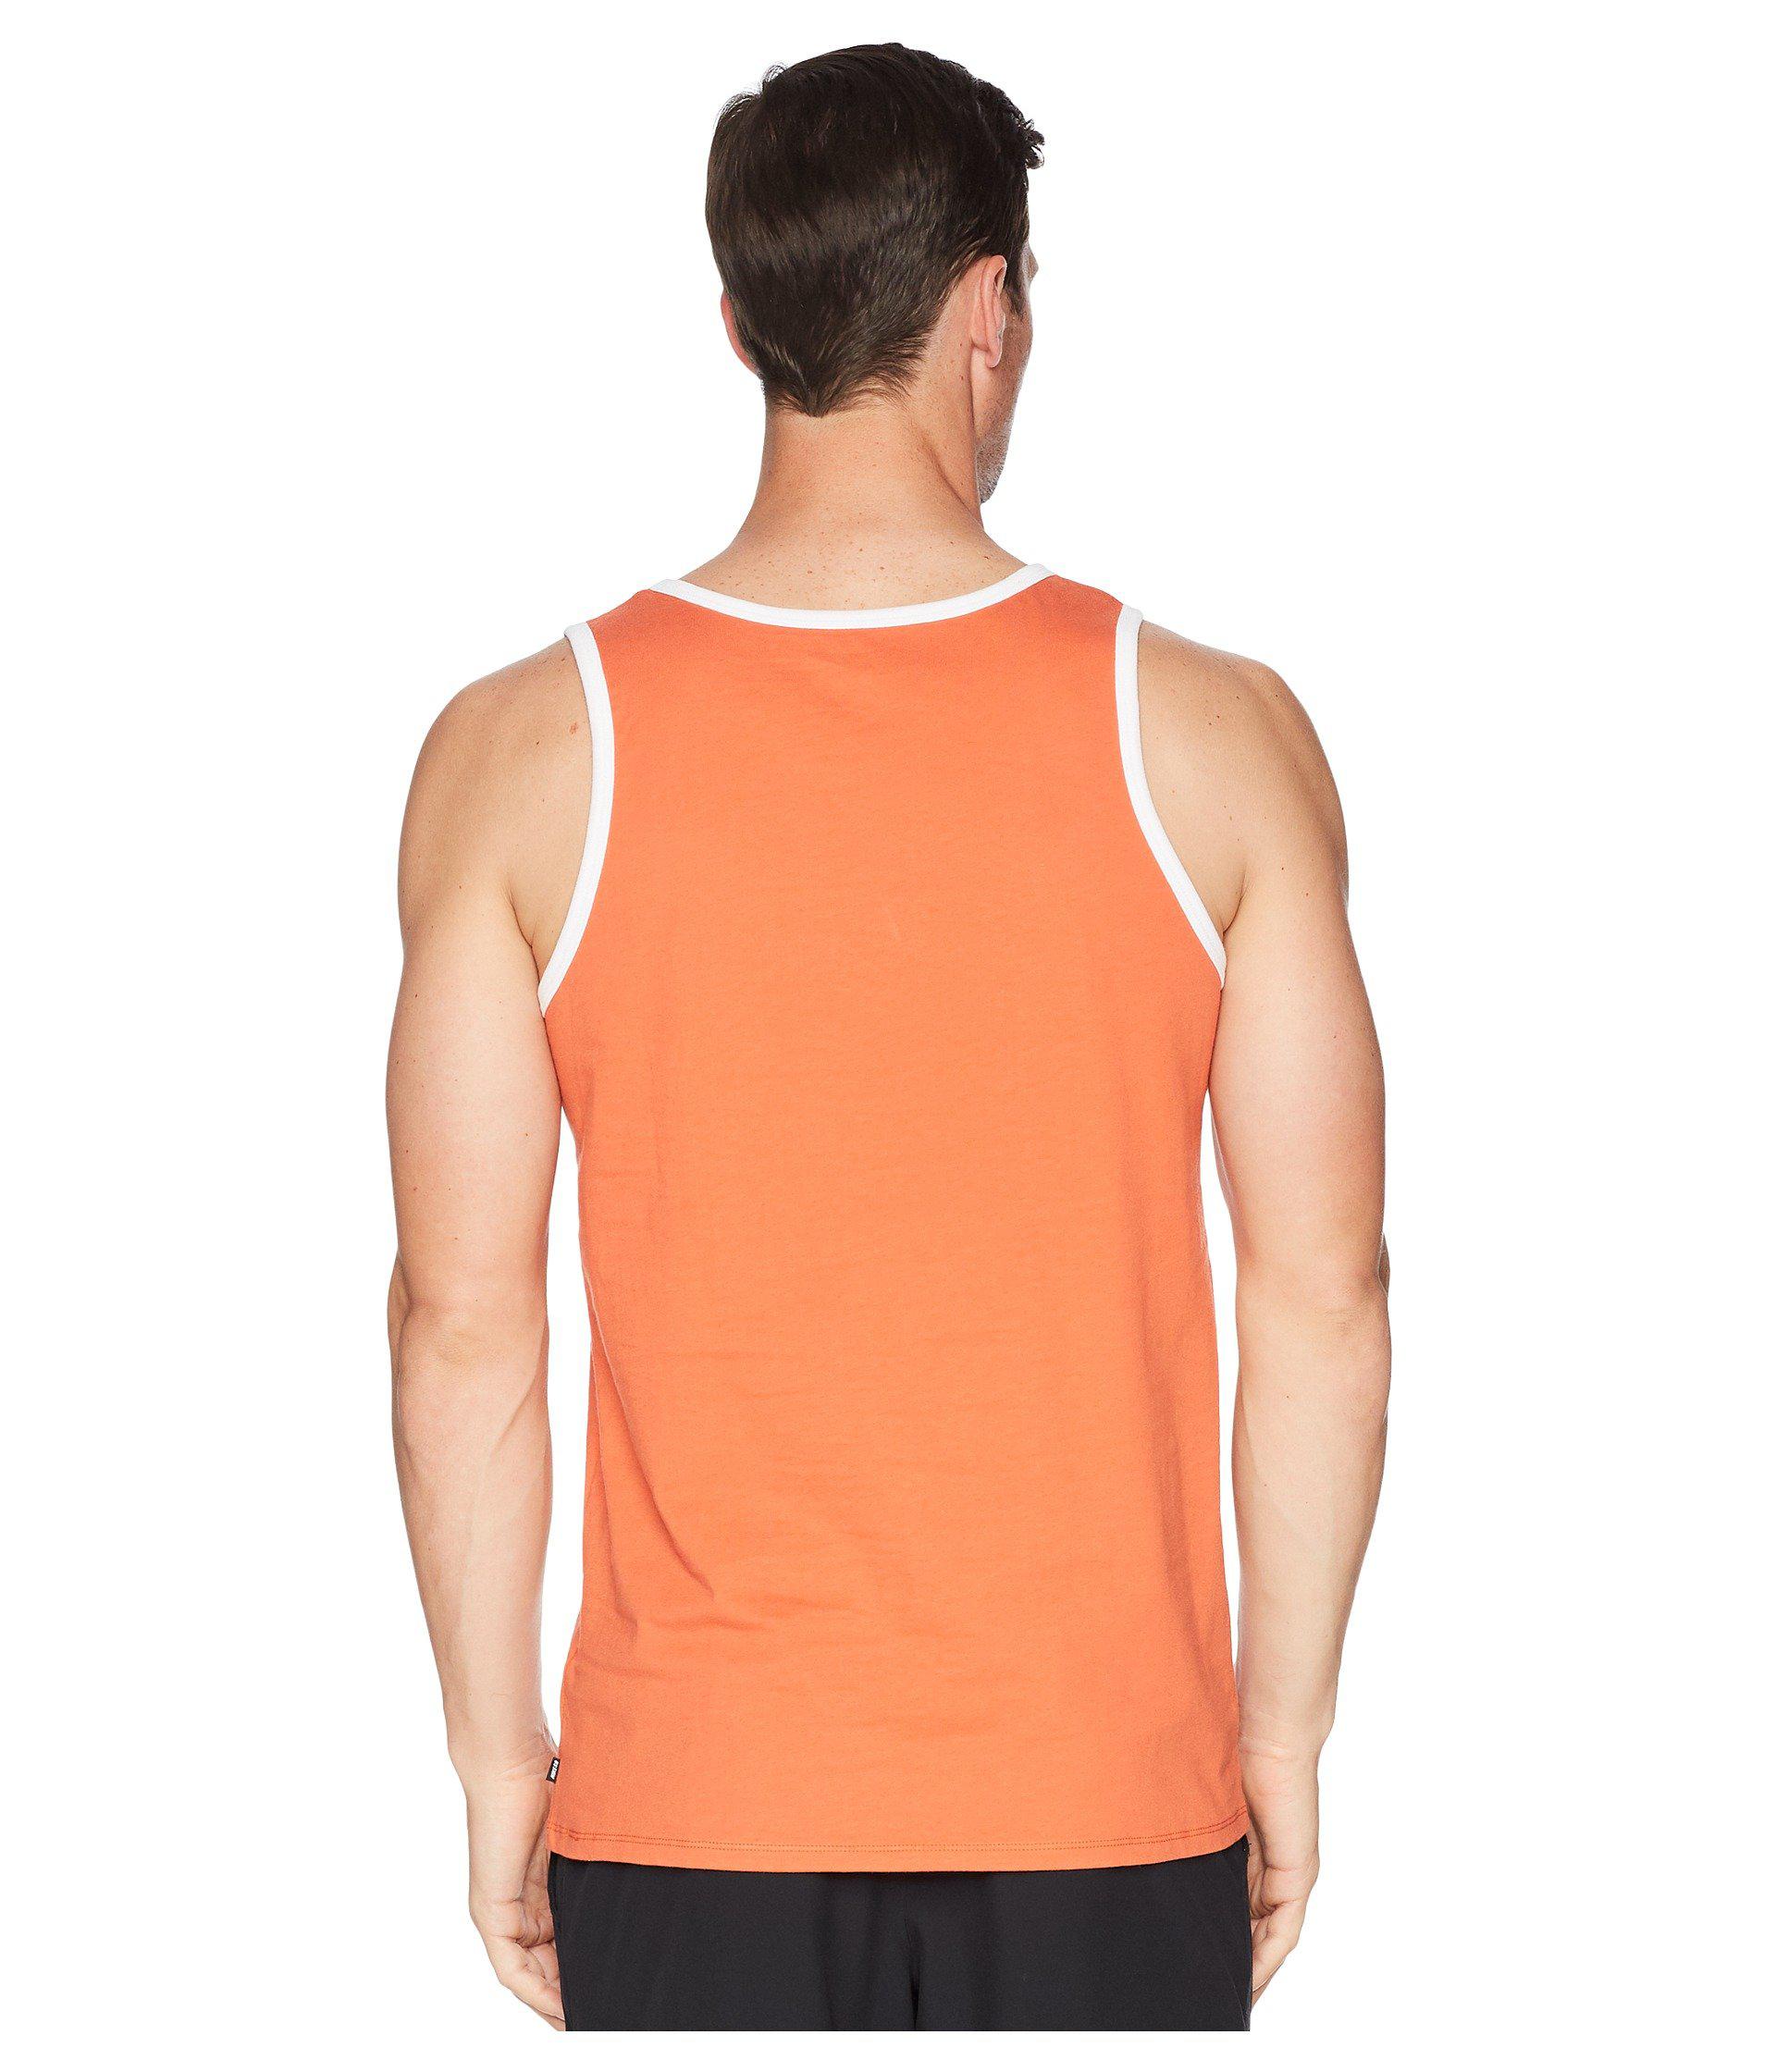 Nike Cotton Sb Tank Top Ringer (white/black) Men's Sleeveless in Vintage  Coral/White (Orange) for Men | Lyst